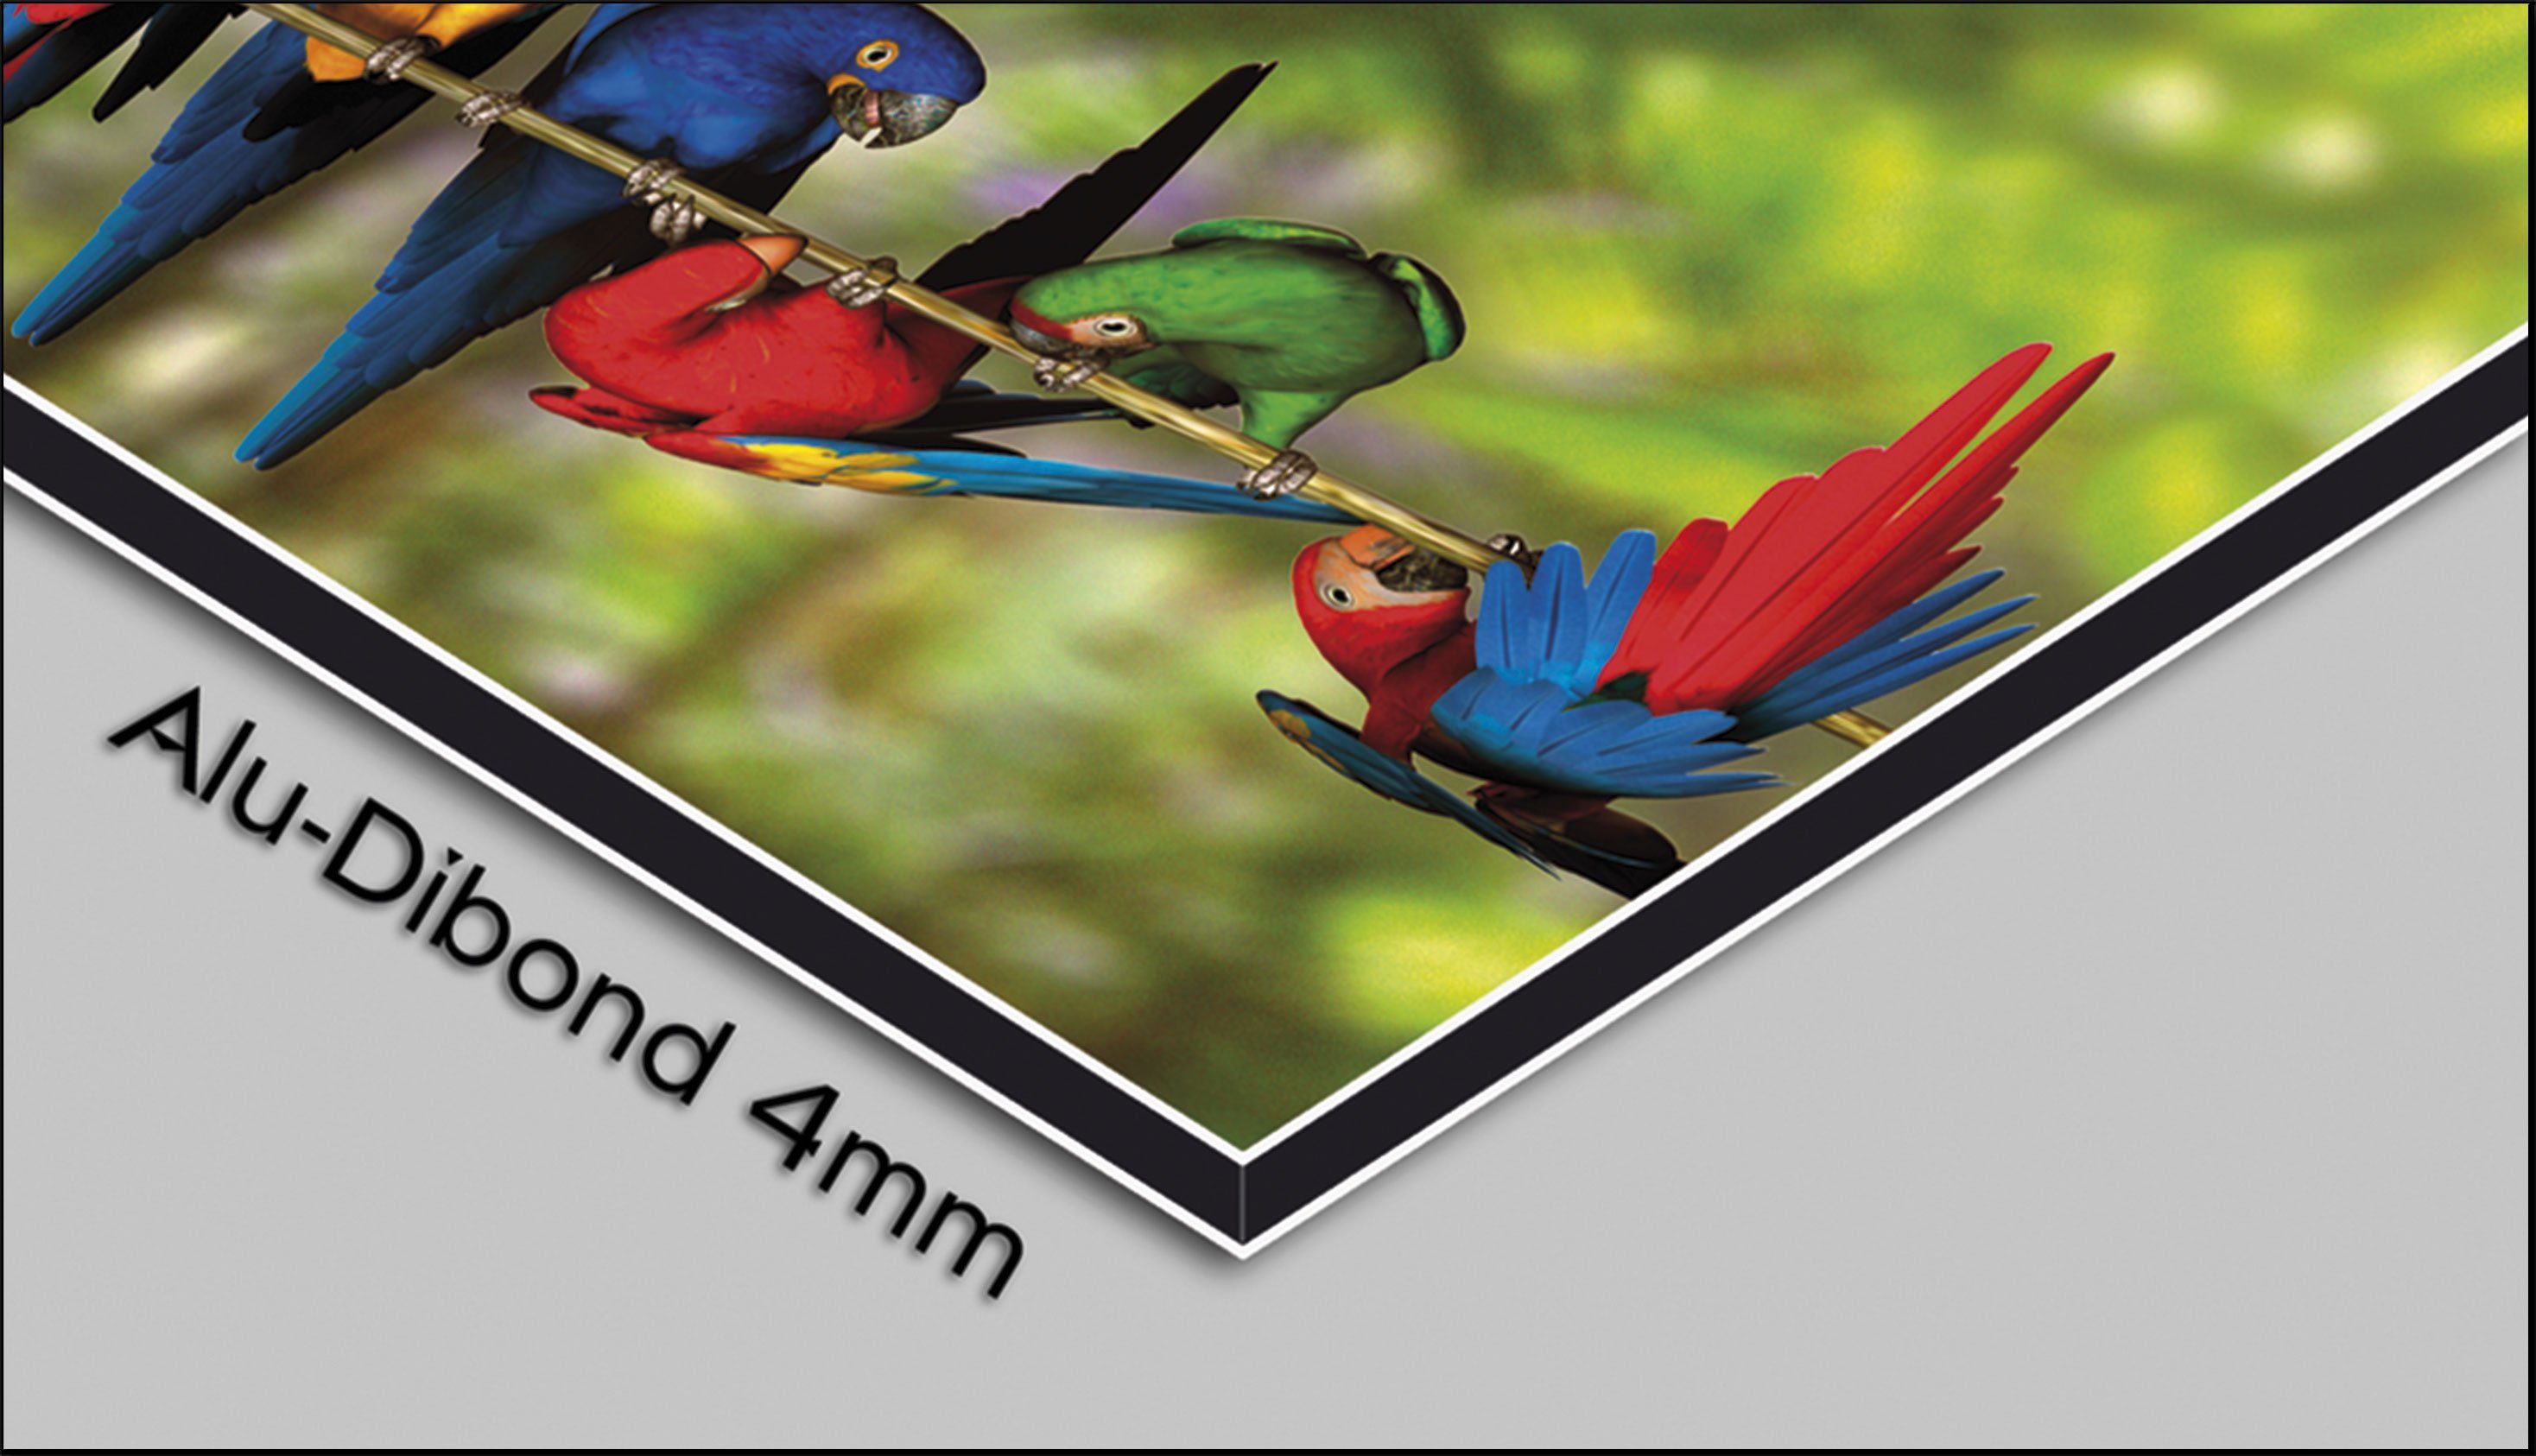 Designer 4mm Alu-Dibond) Design Farbverlauf Abstrakt Wanduhr (Einzigartige leise modernes dixtime Wanduhr aus Wanduhren 3D-Optik